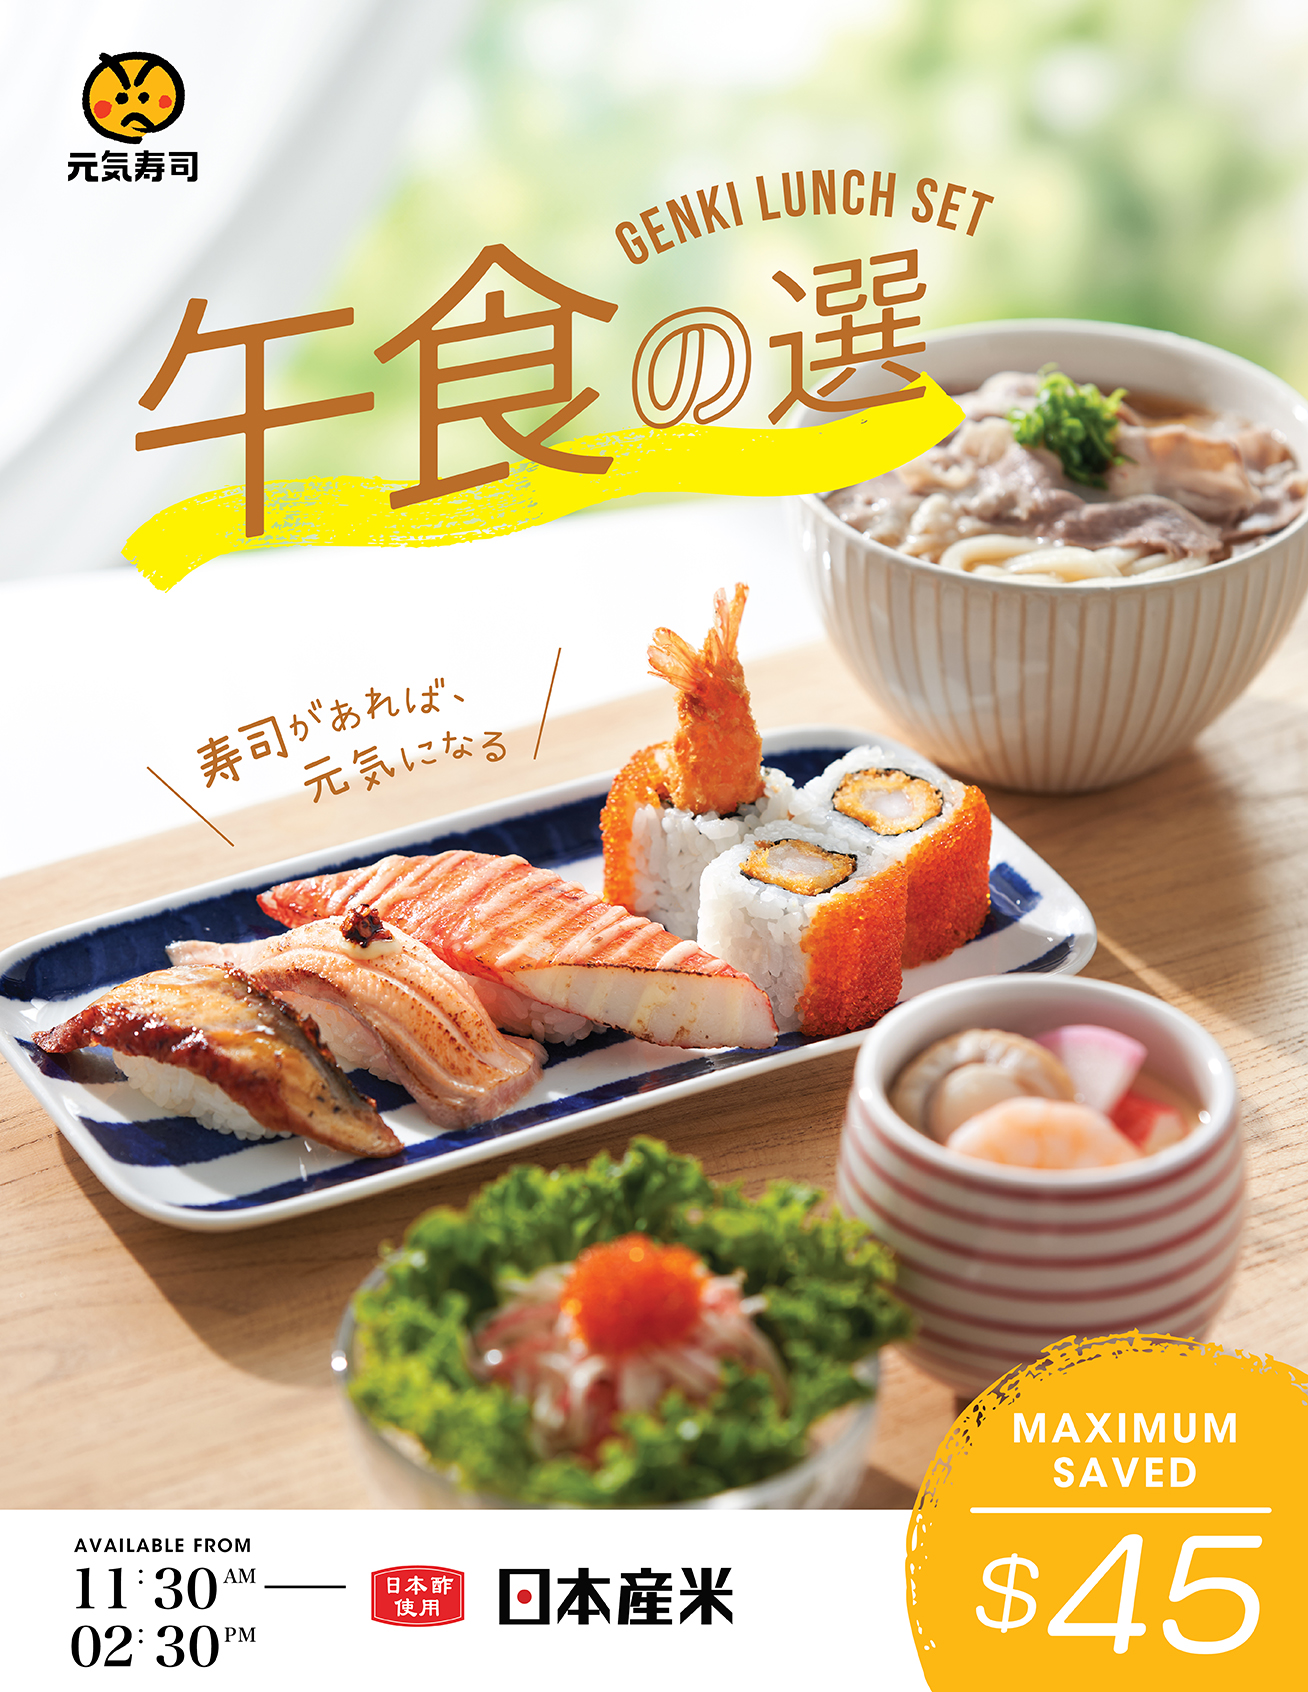 2405_Online_Order_Genki_Lunch_Tea_online_ordering__1308Wx1692H__Eng.jpg